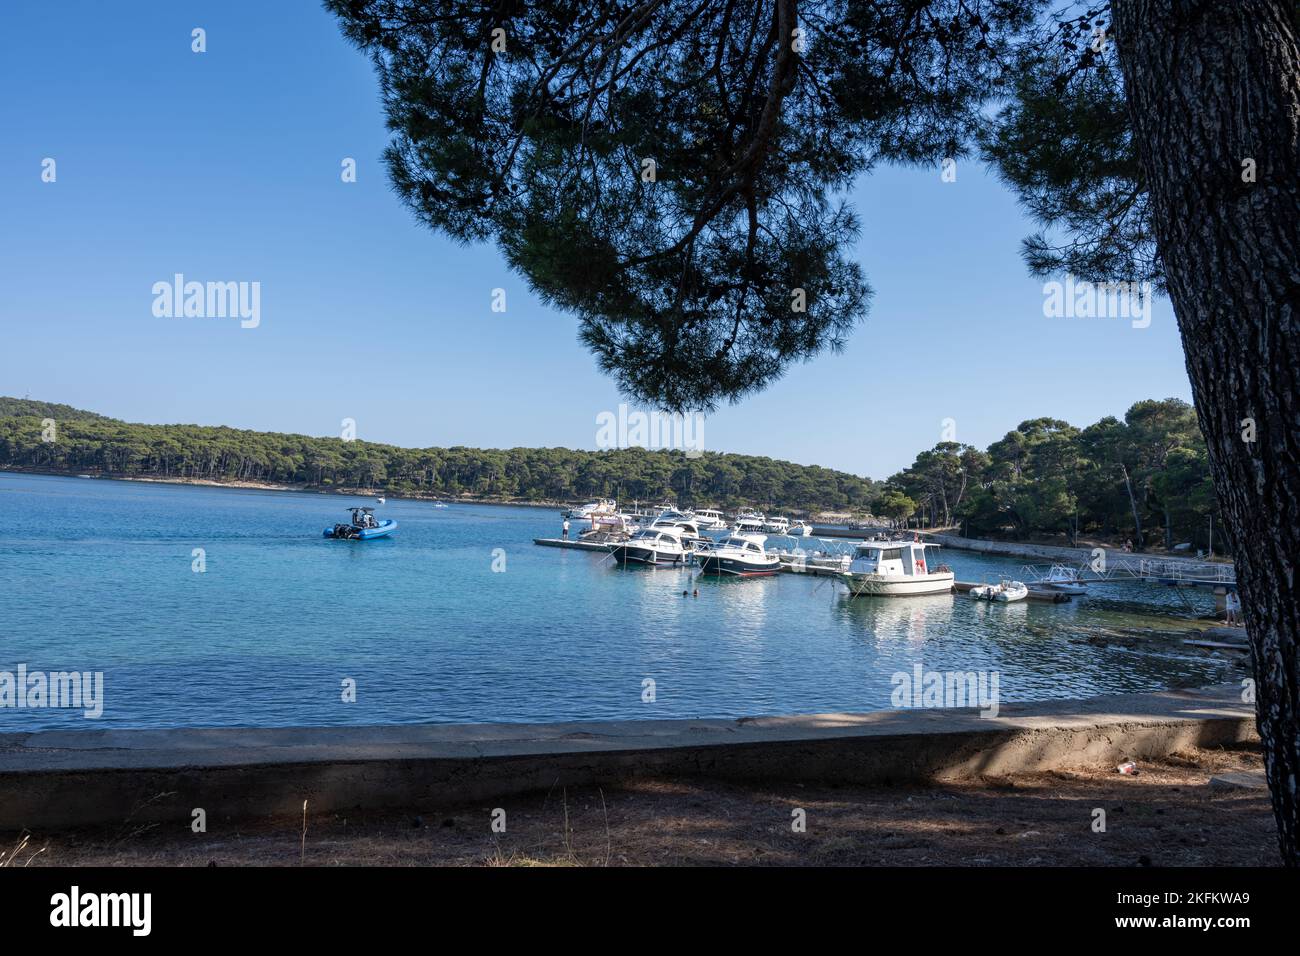 An ocean bay at Osor village, Losinj island, the Adriatic Sea, Croatia Stock Photo